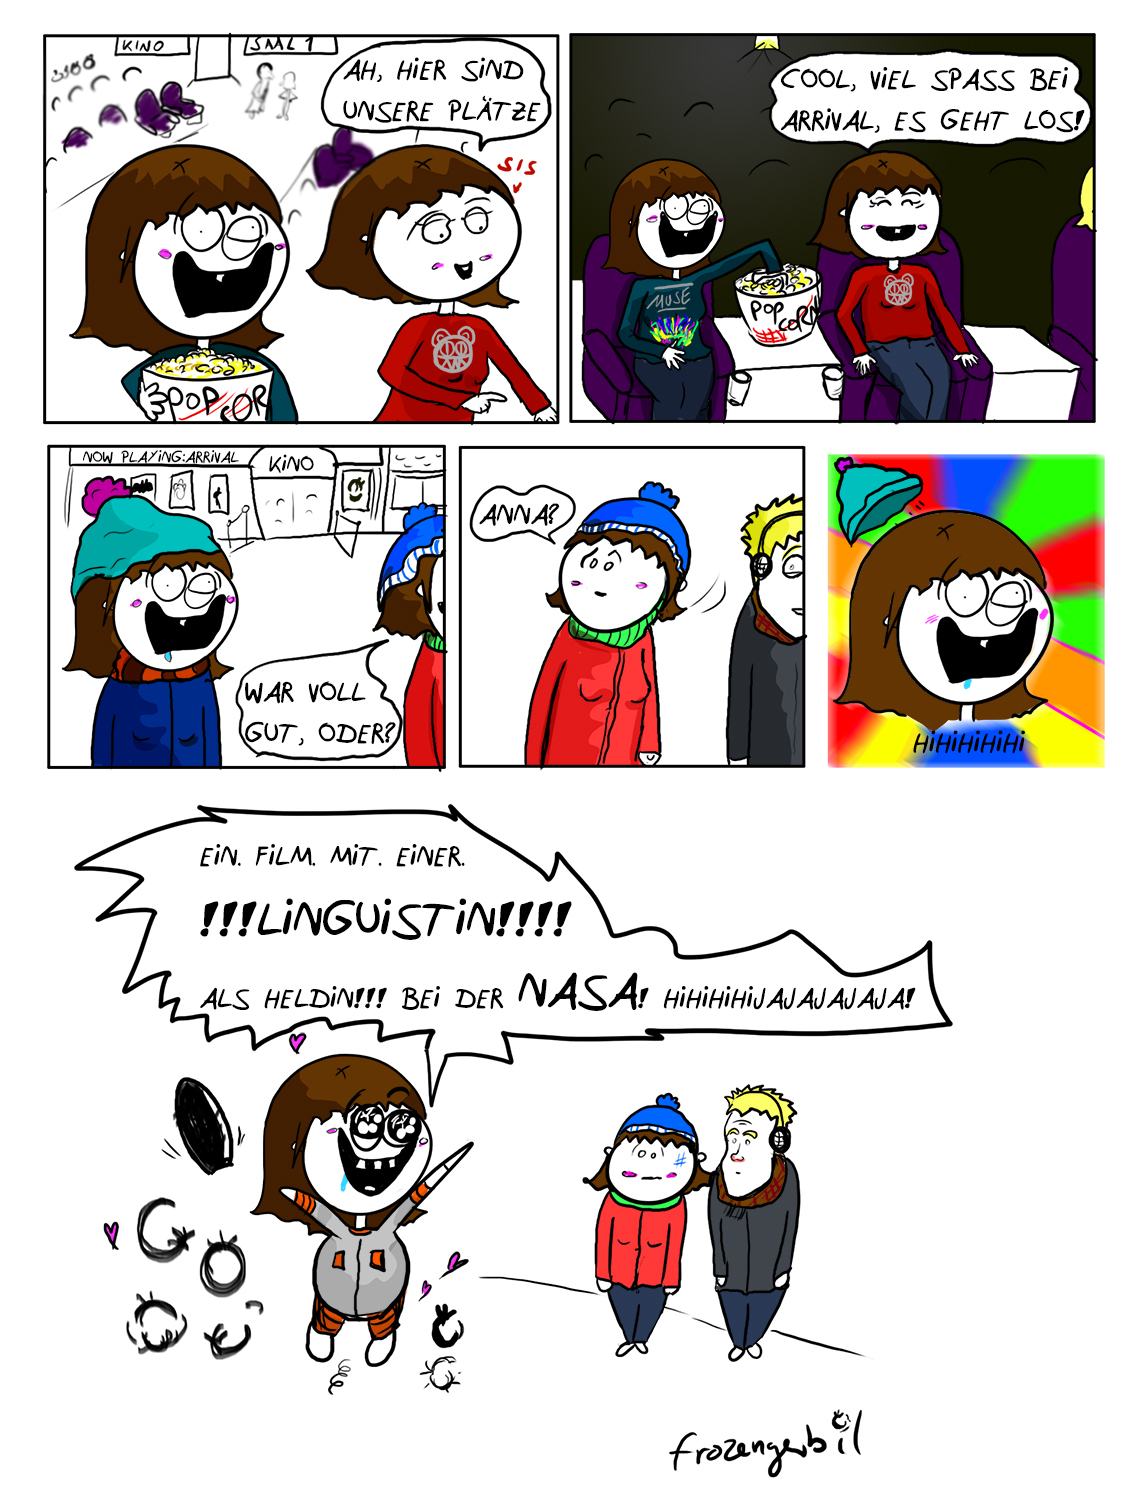 Frozen Gerbil (Comic): Linguistin